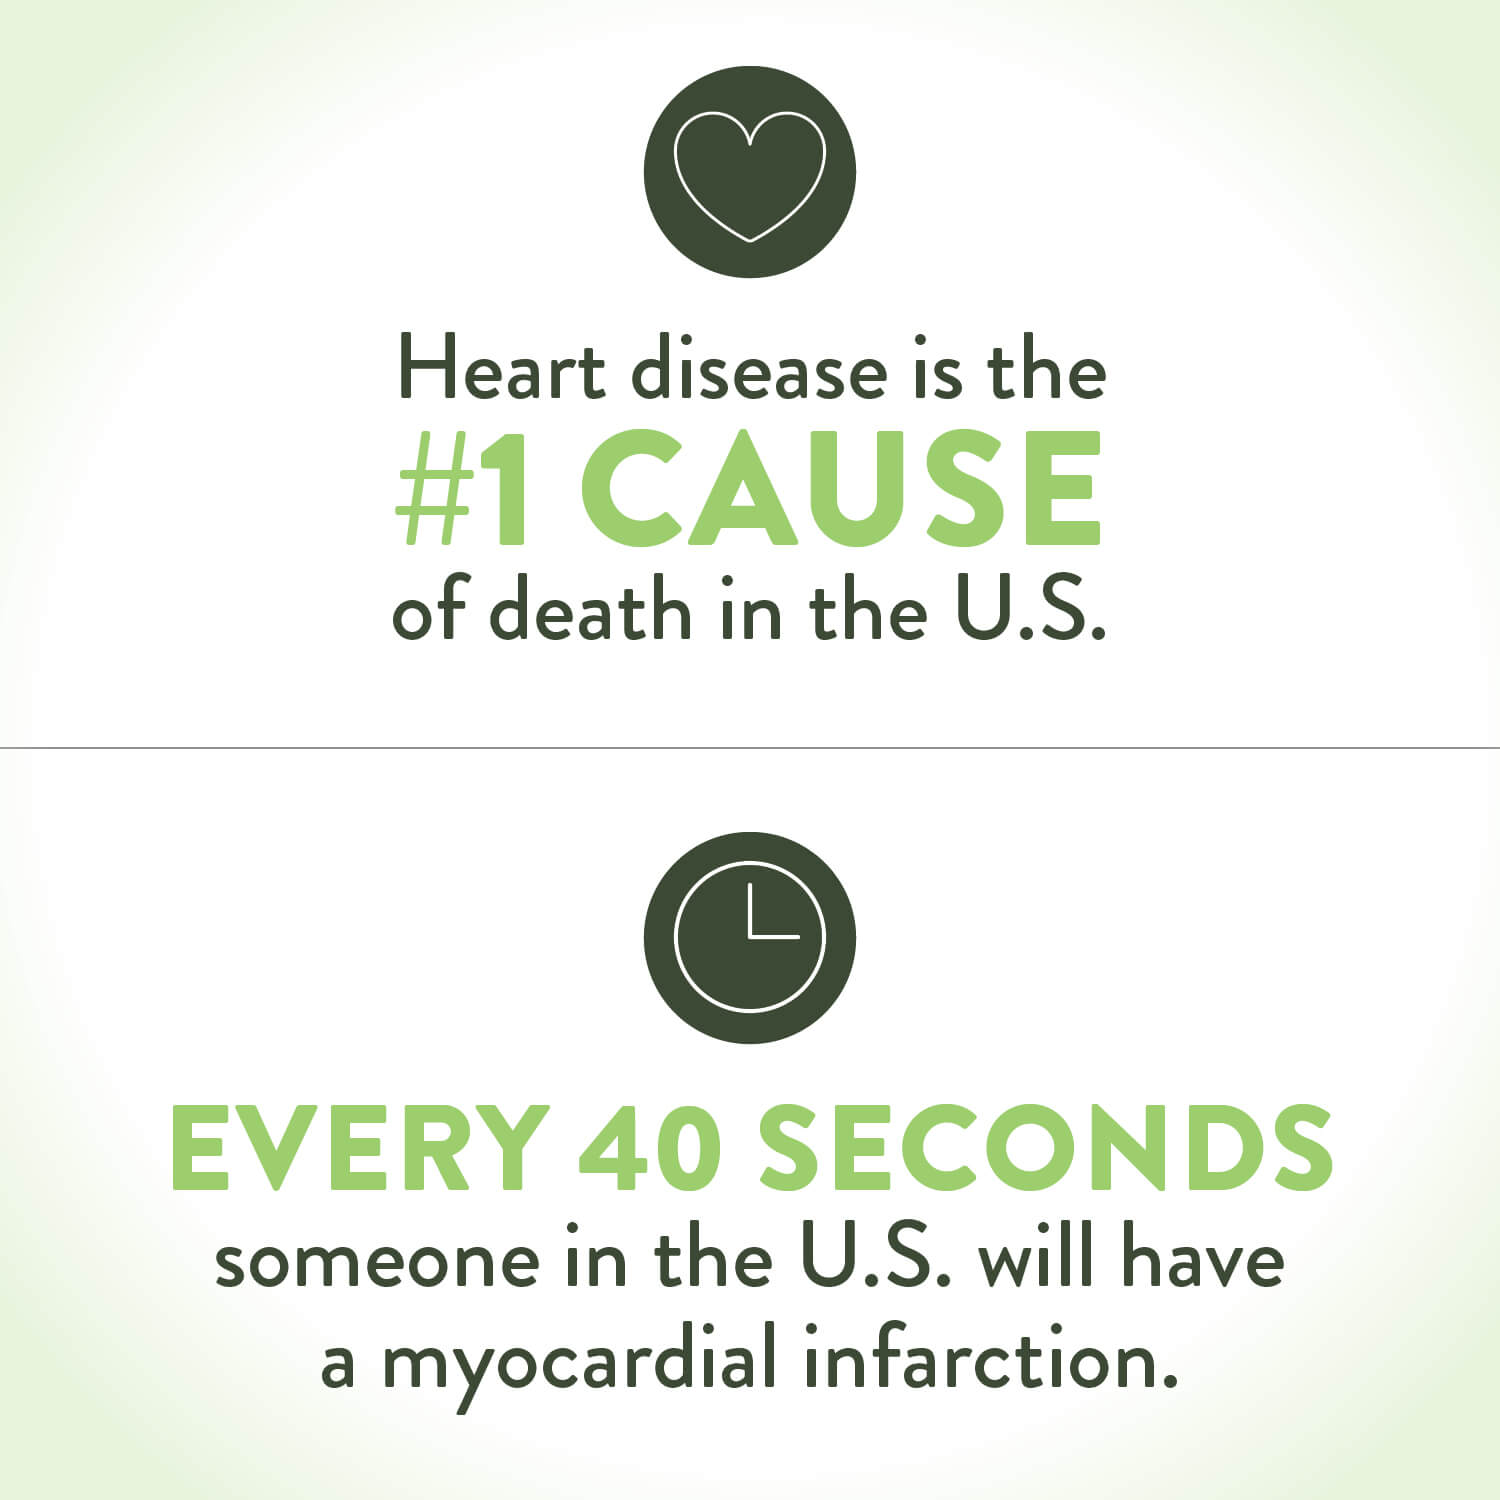 Statistics on heart disease